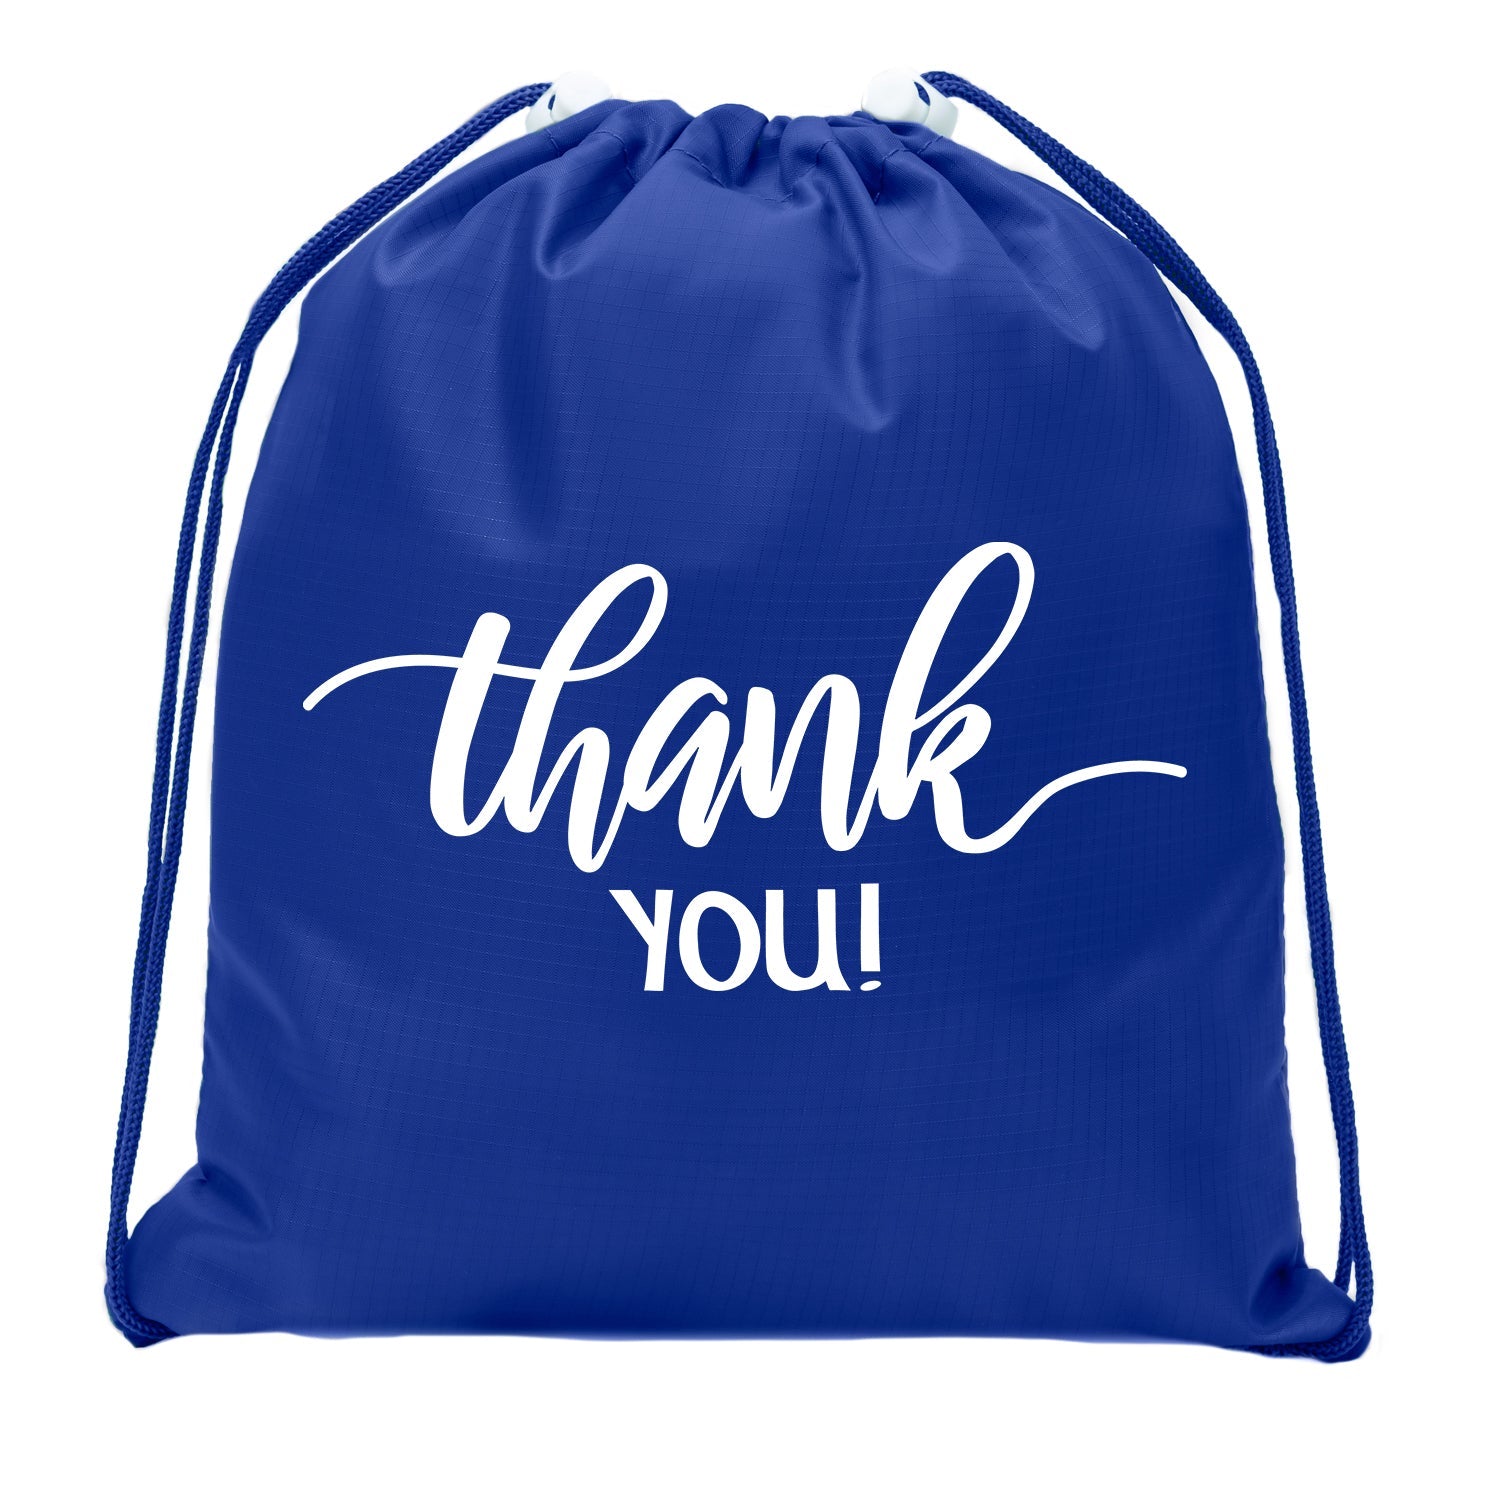 Thank You! Mini Polyester Drawstring Bag - Mato & Hash